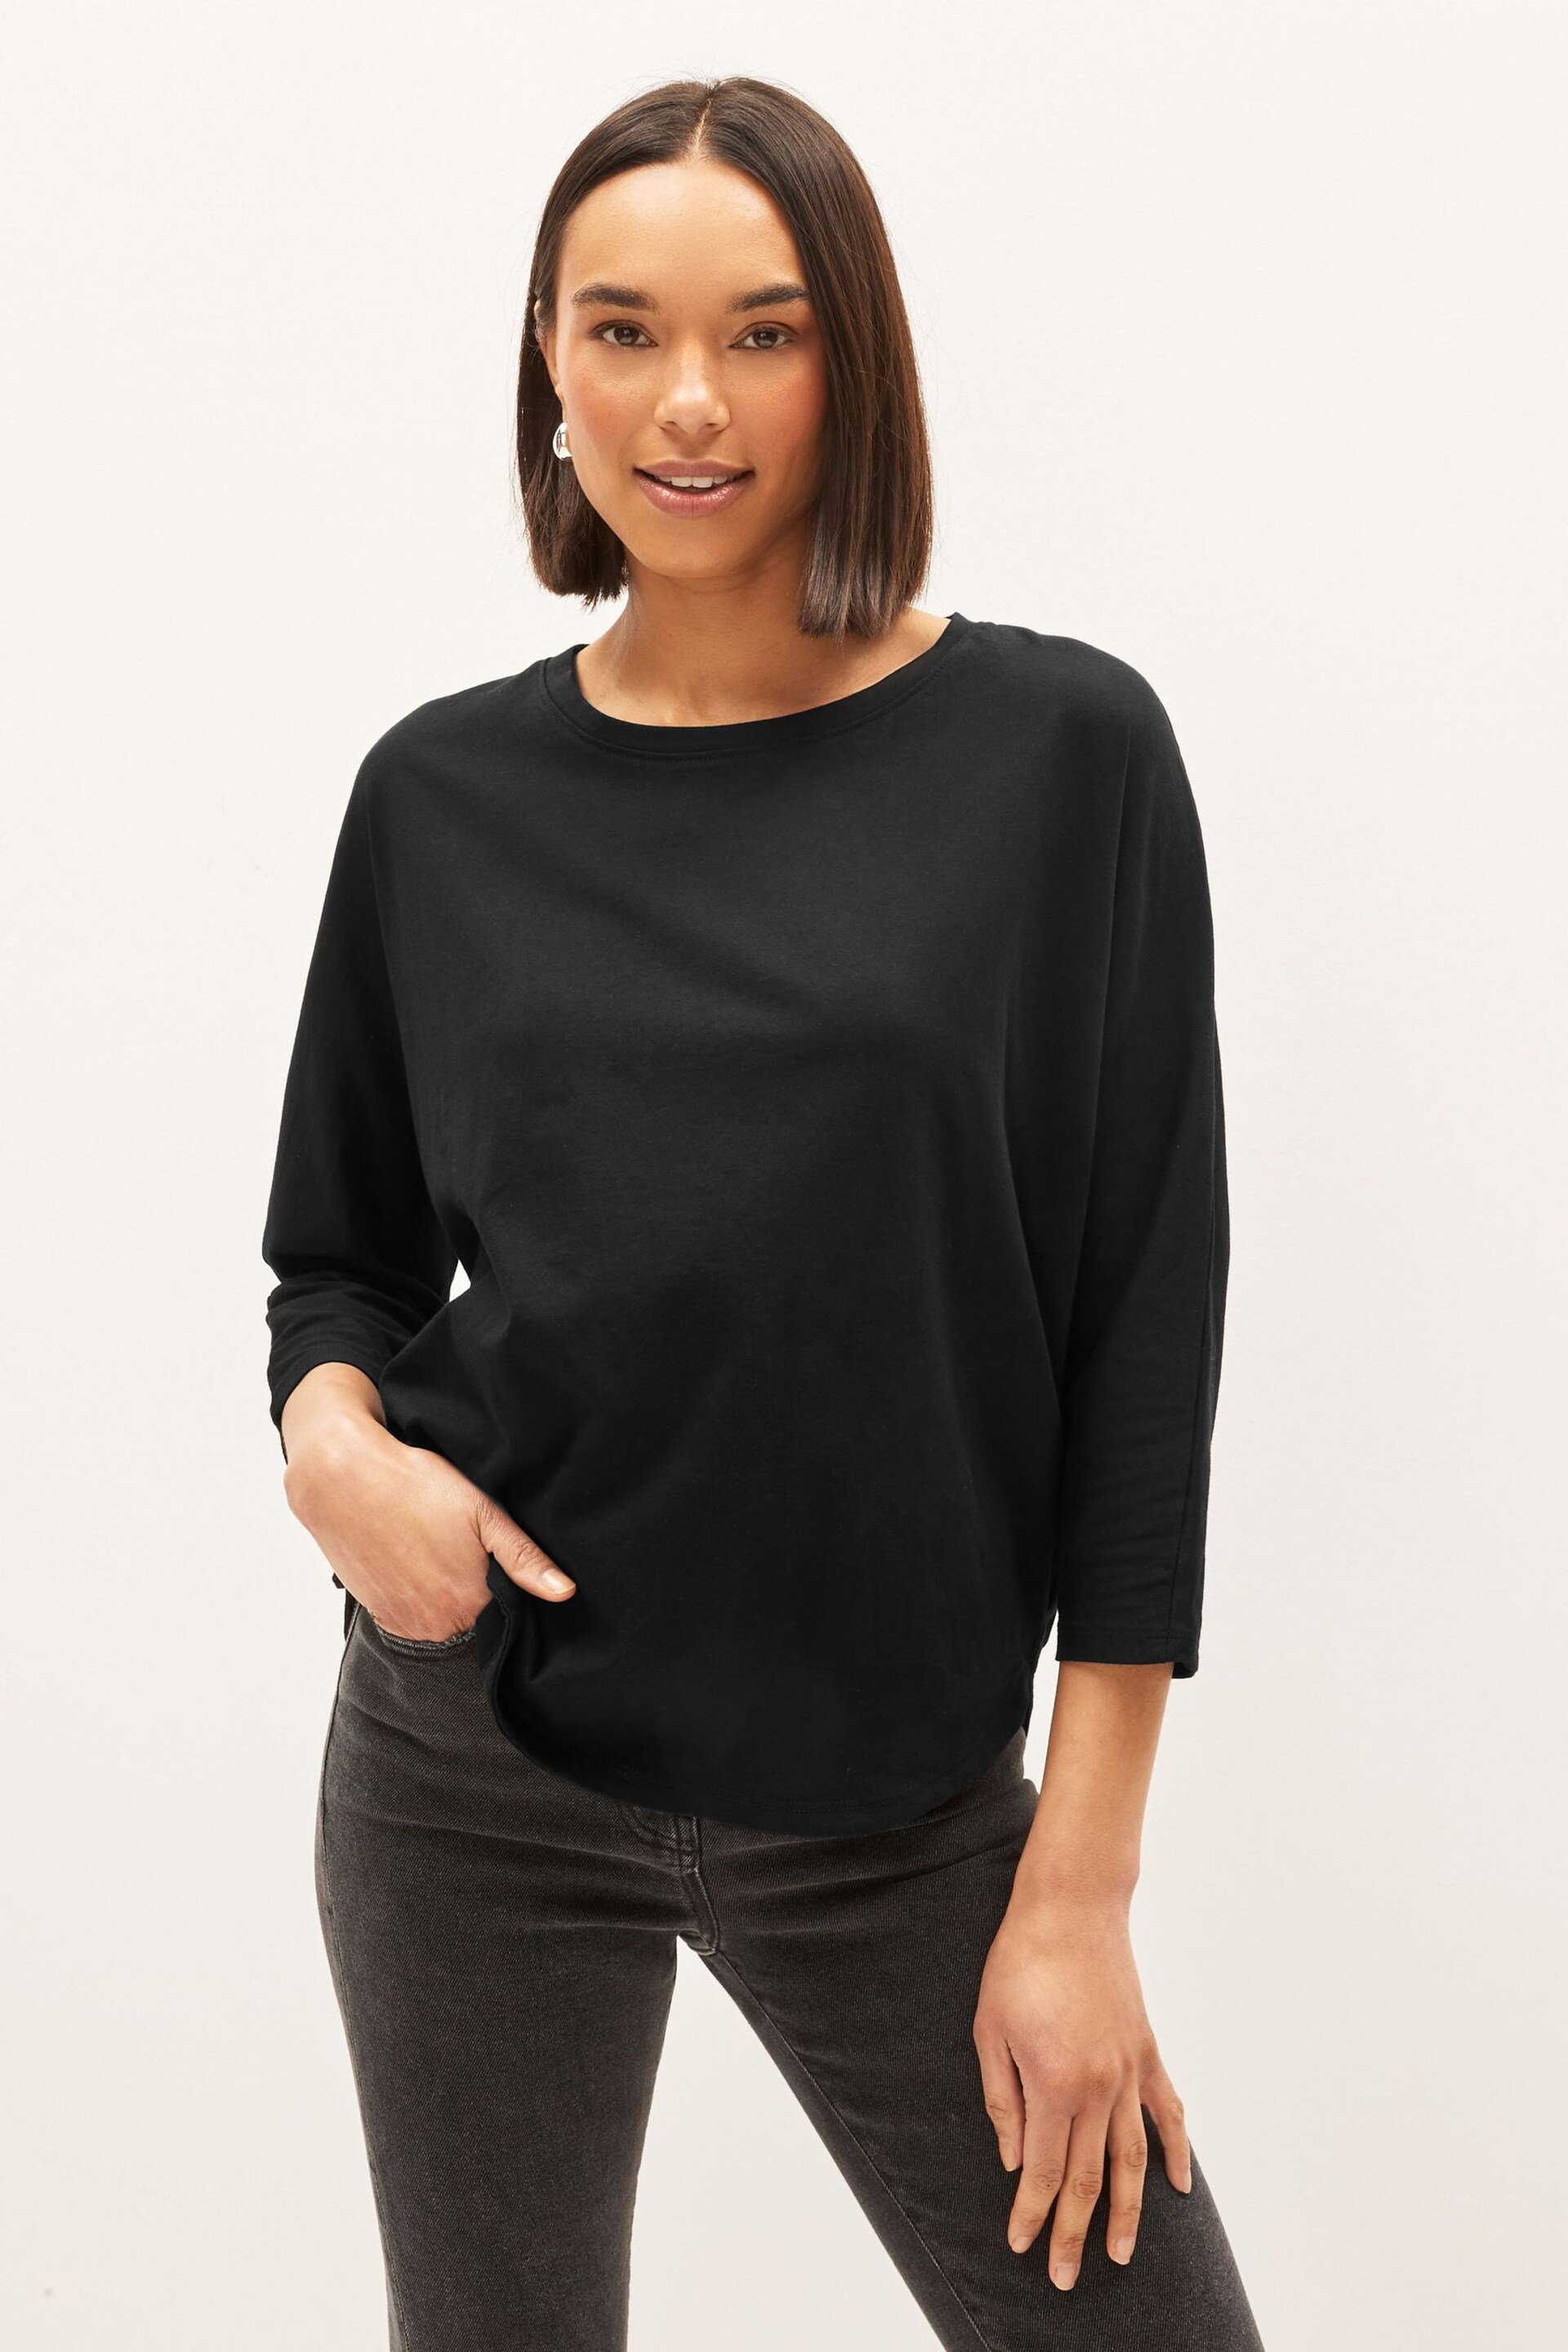 Black 3/4 Length Sleeve T-Shirt - Image 1 of 6